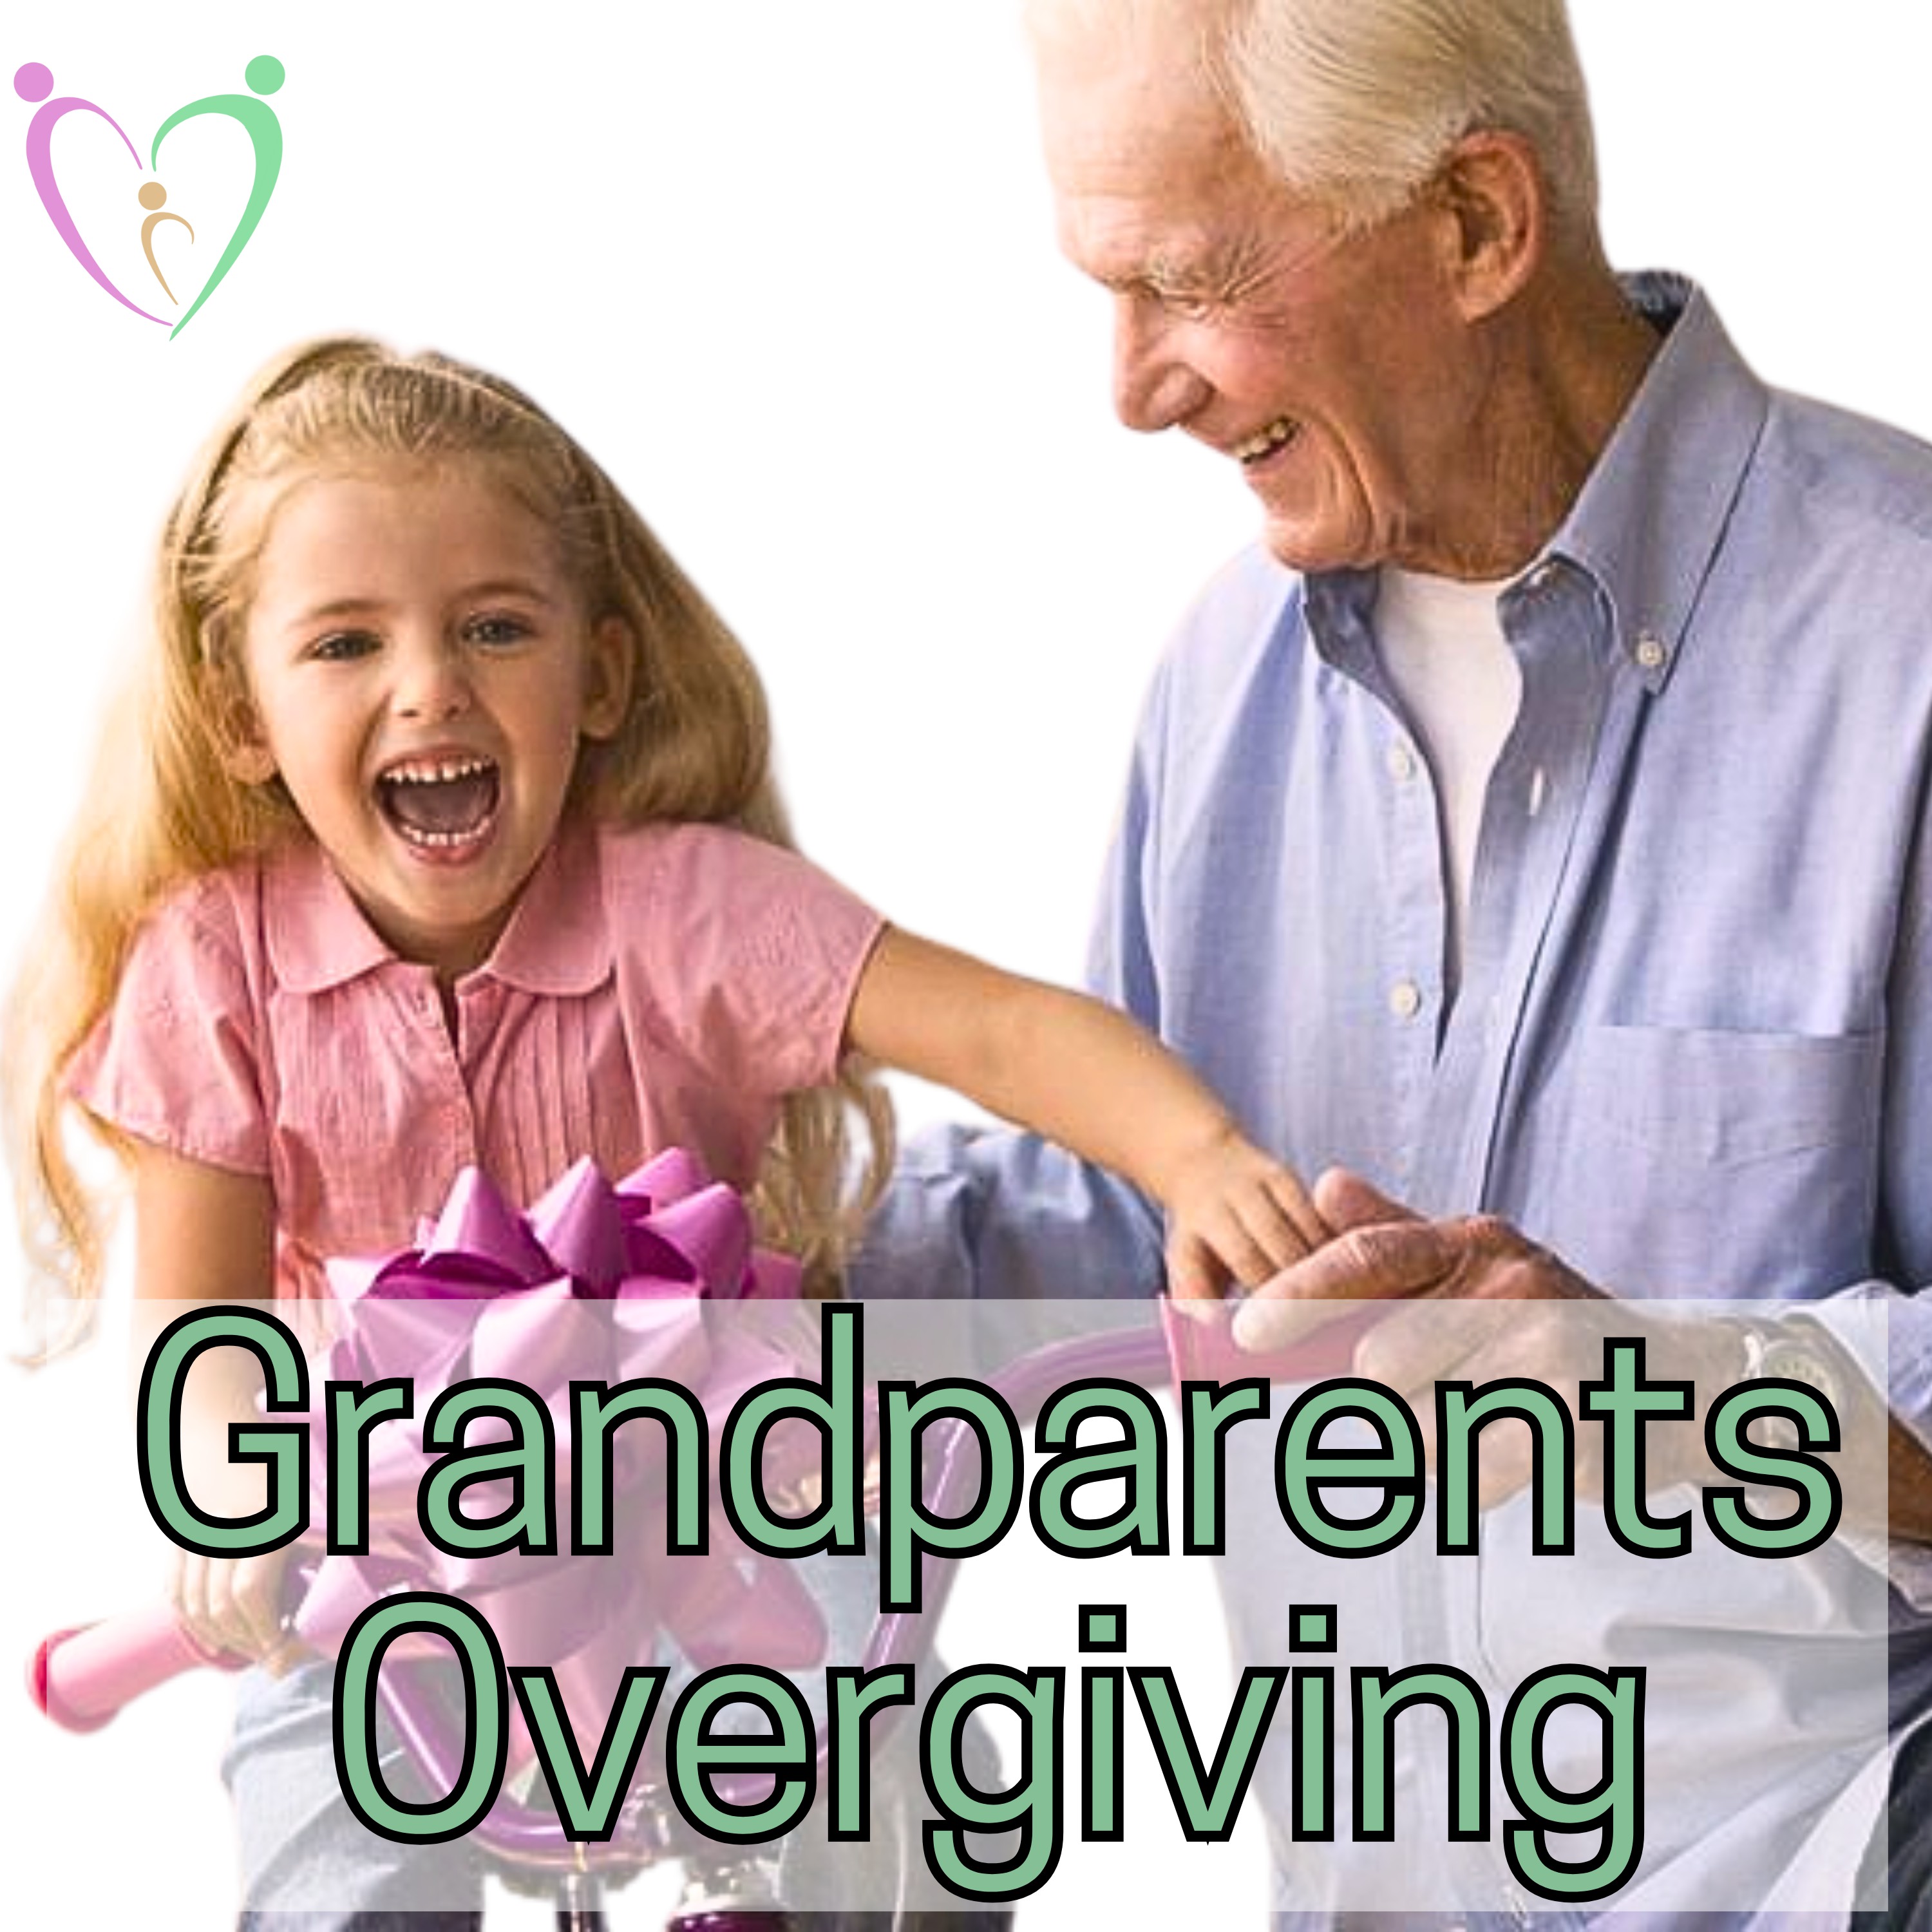 Overgiving Grandparents